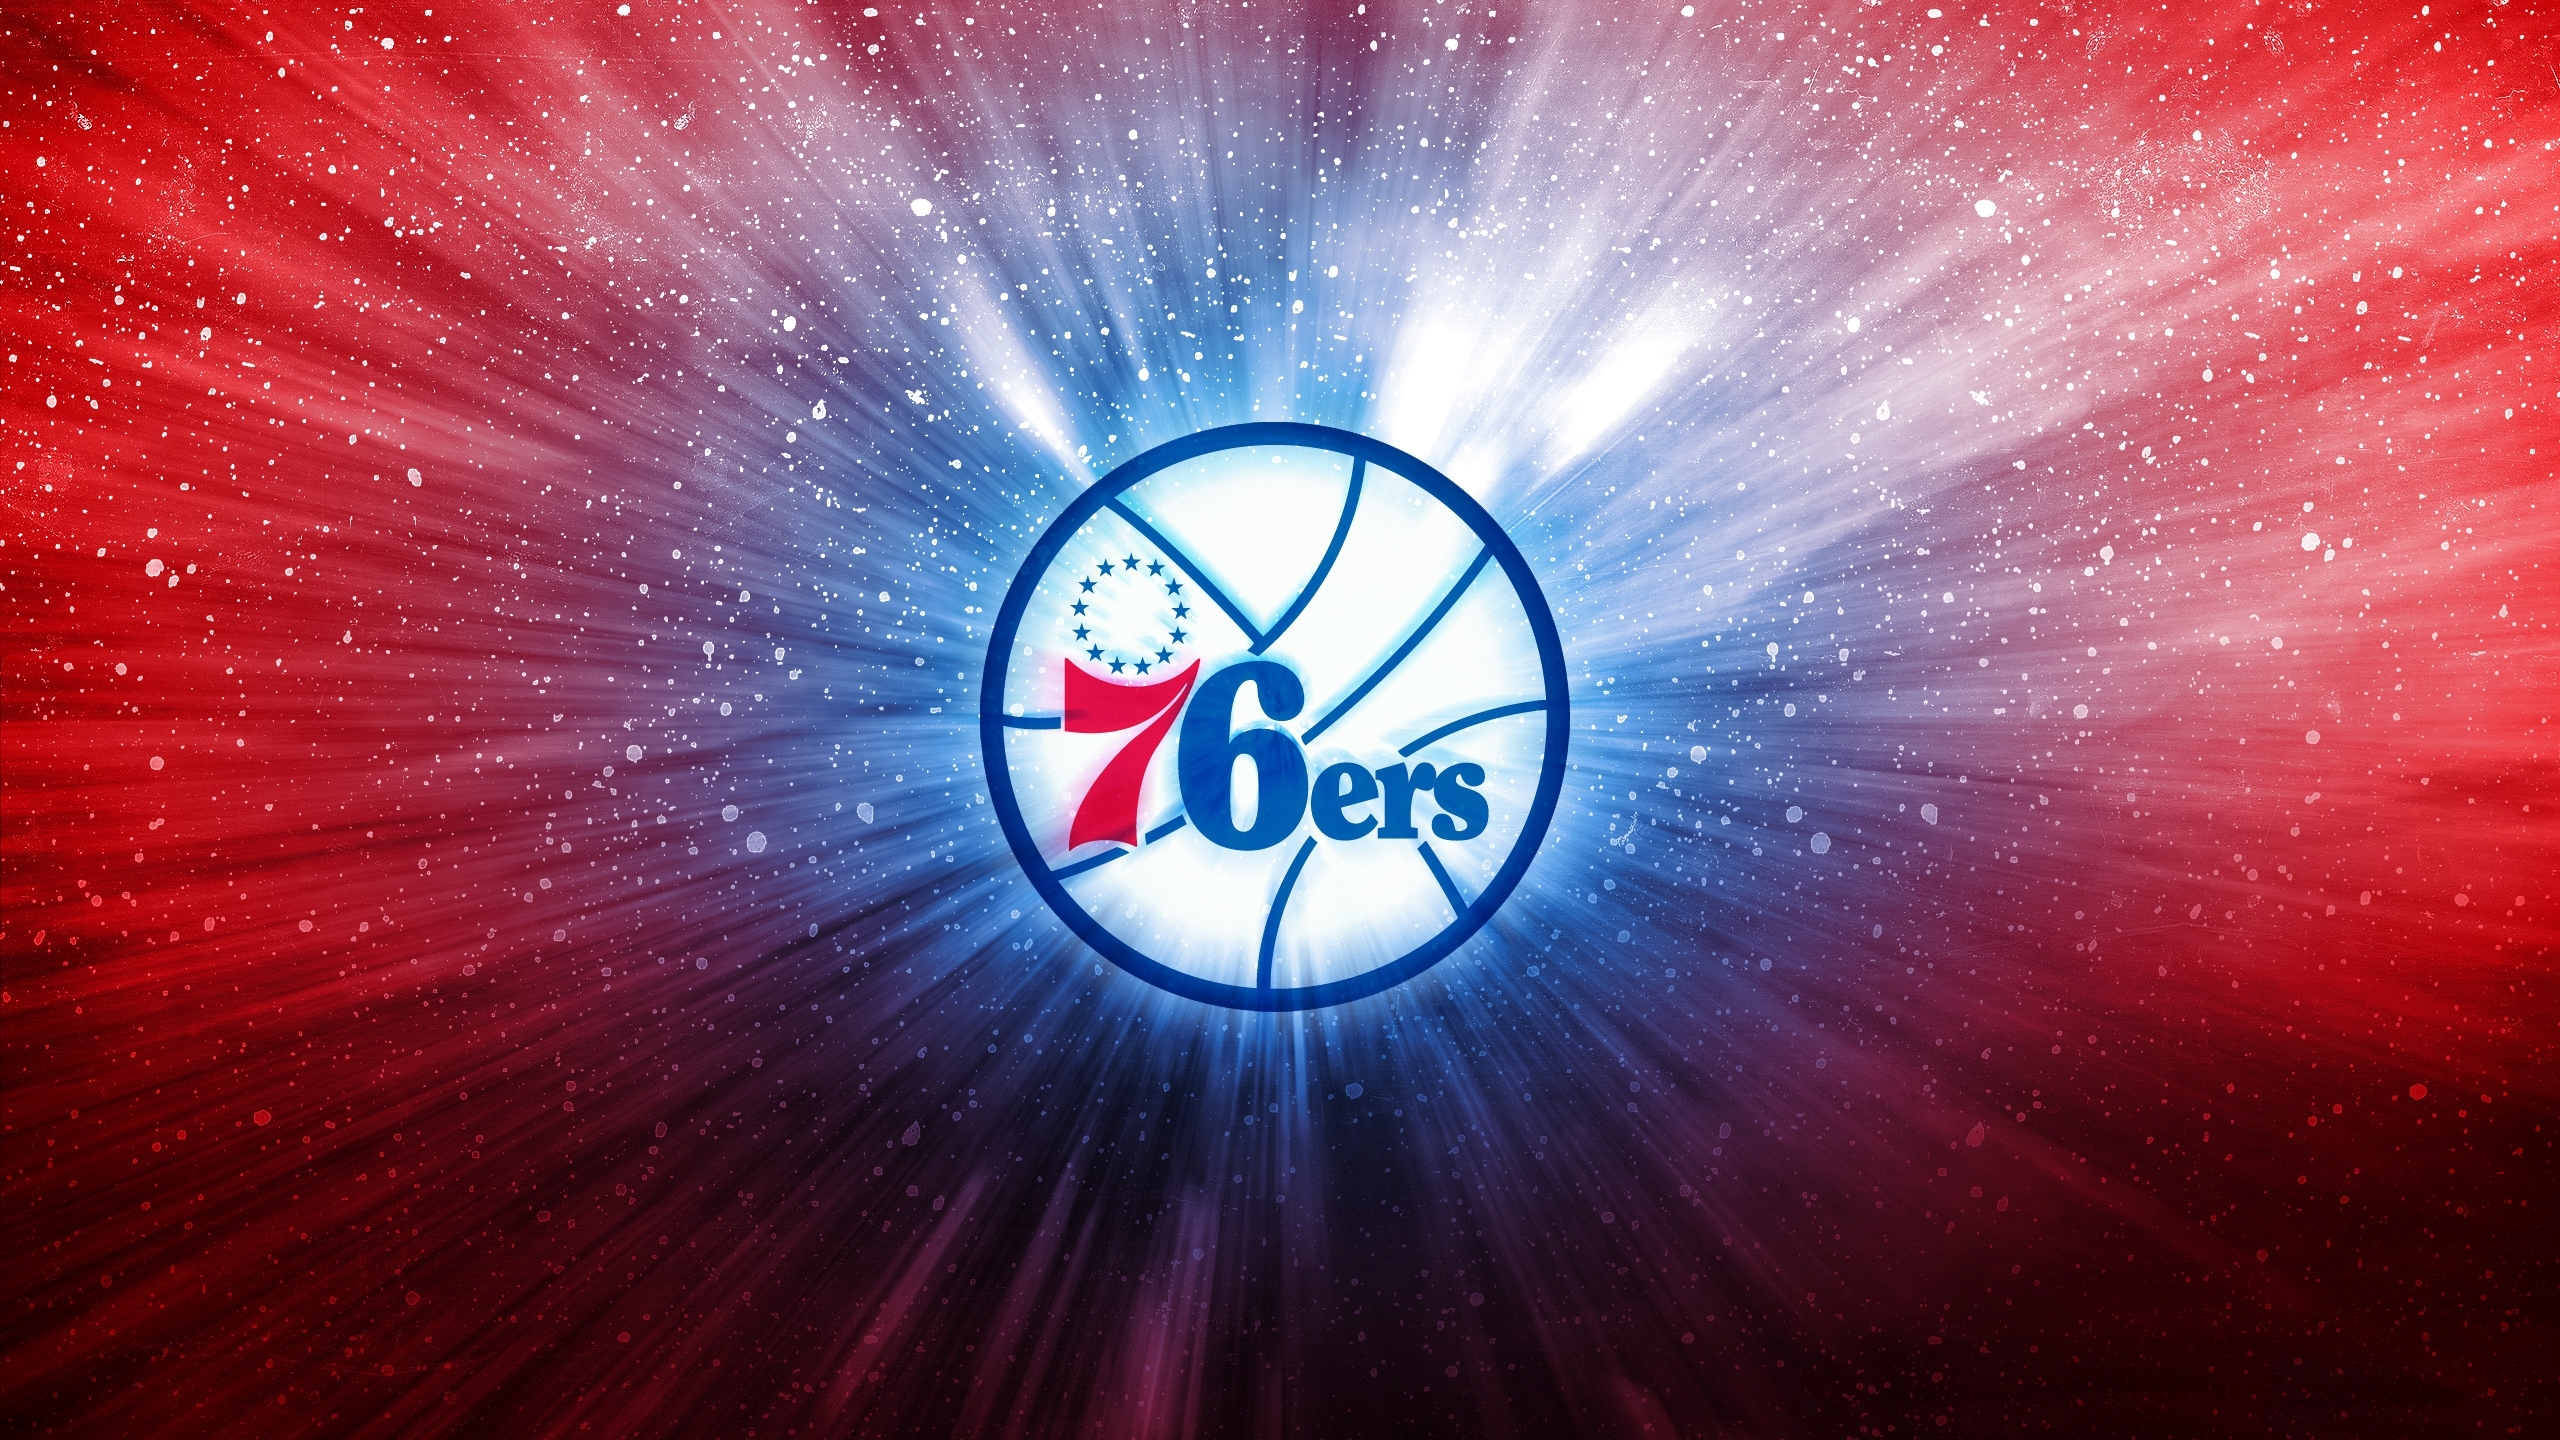 Philadelphia 76Ers Widescreen image